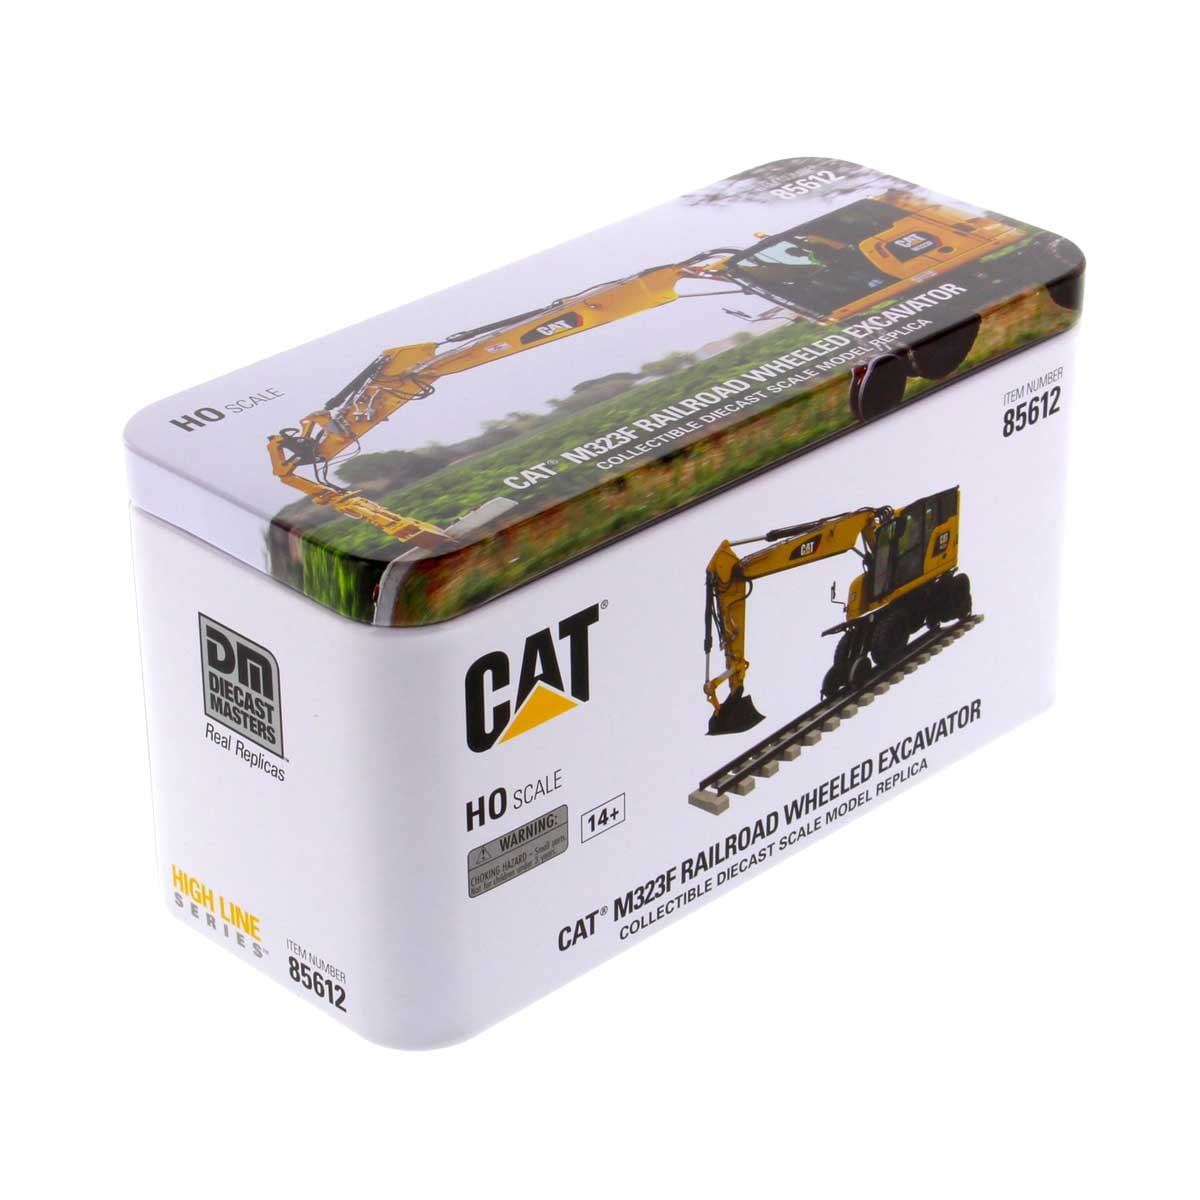 85612 Cat Caterpillar M323f Railroad Wheeled Excavator